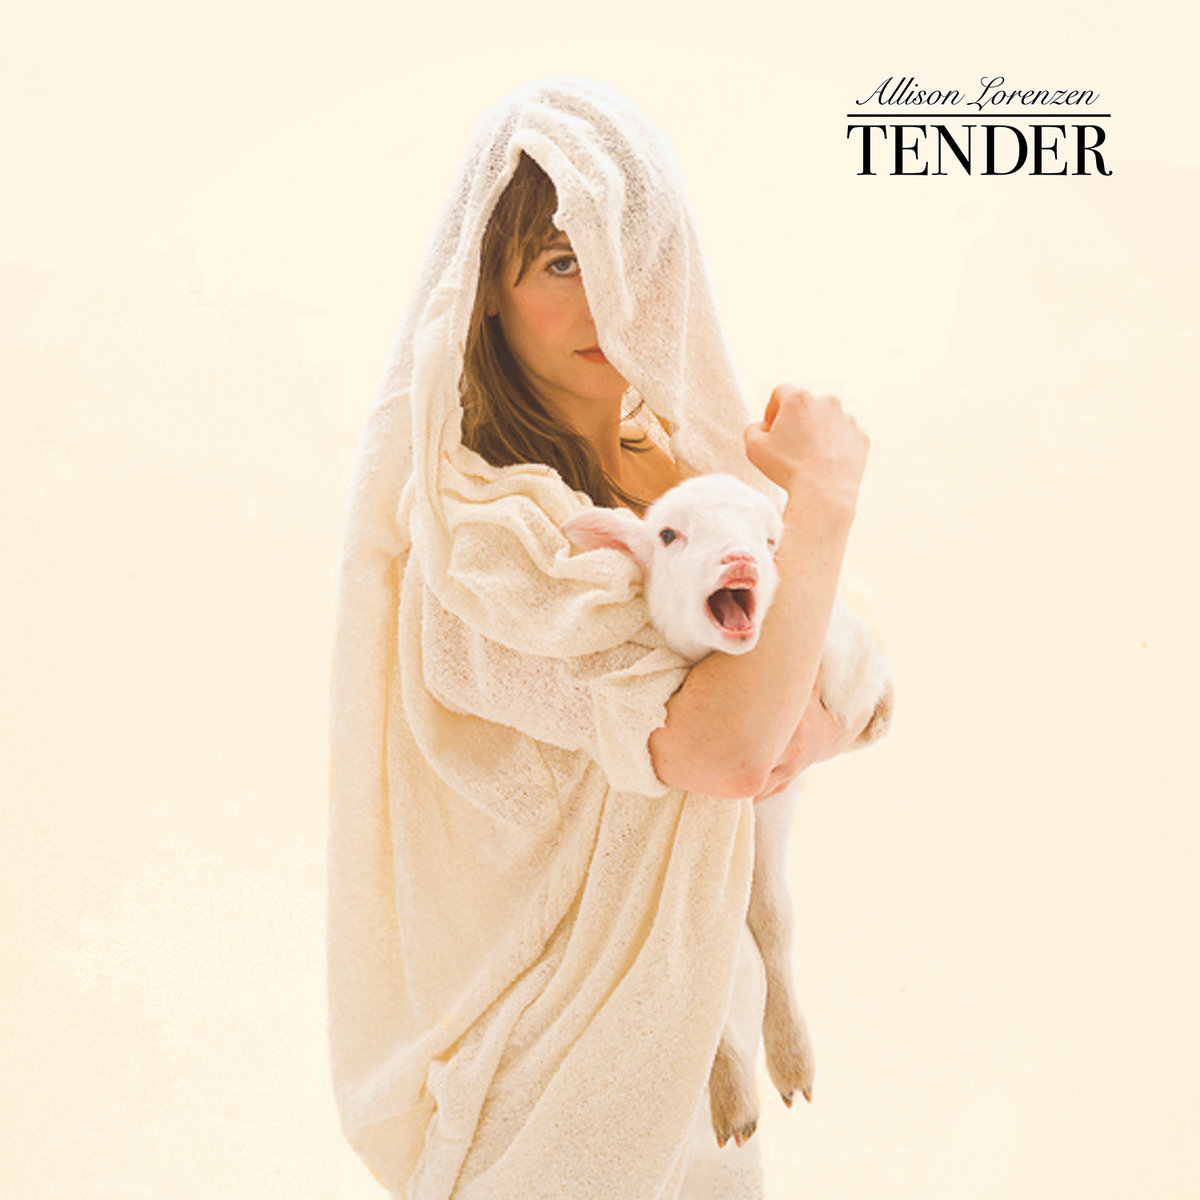 Photo of Allison Lorenzen draped in white cloth holding a lamb